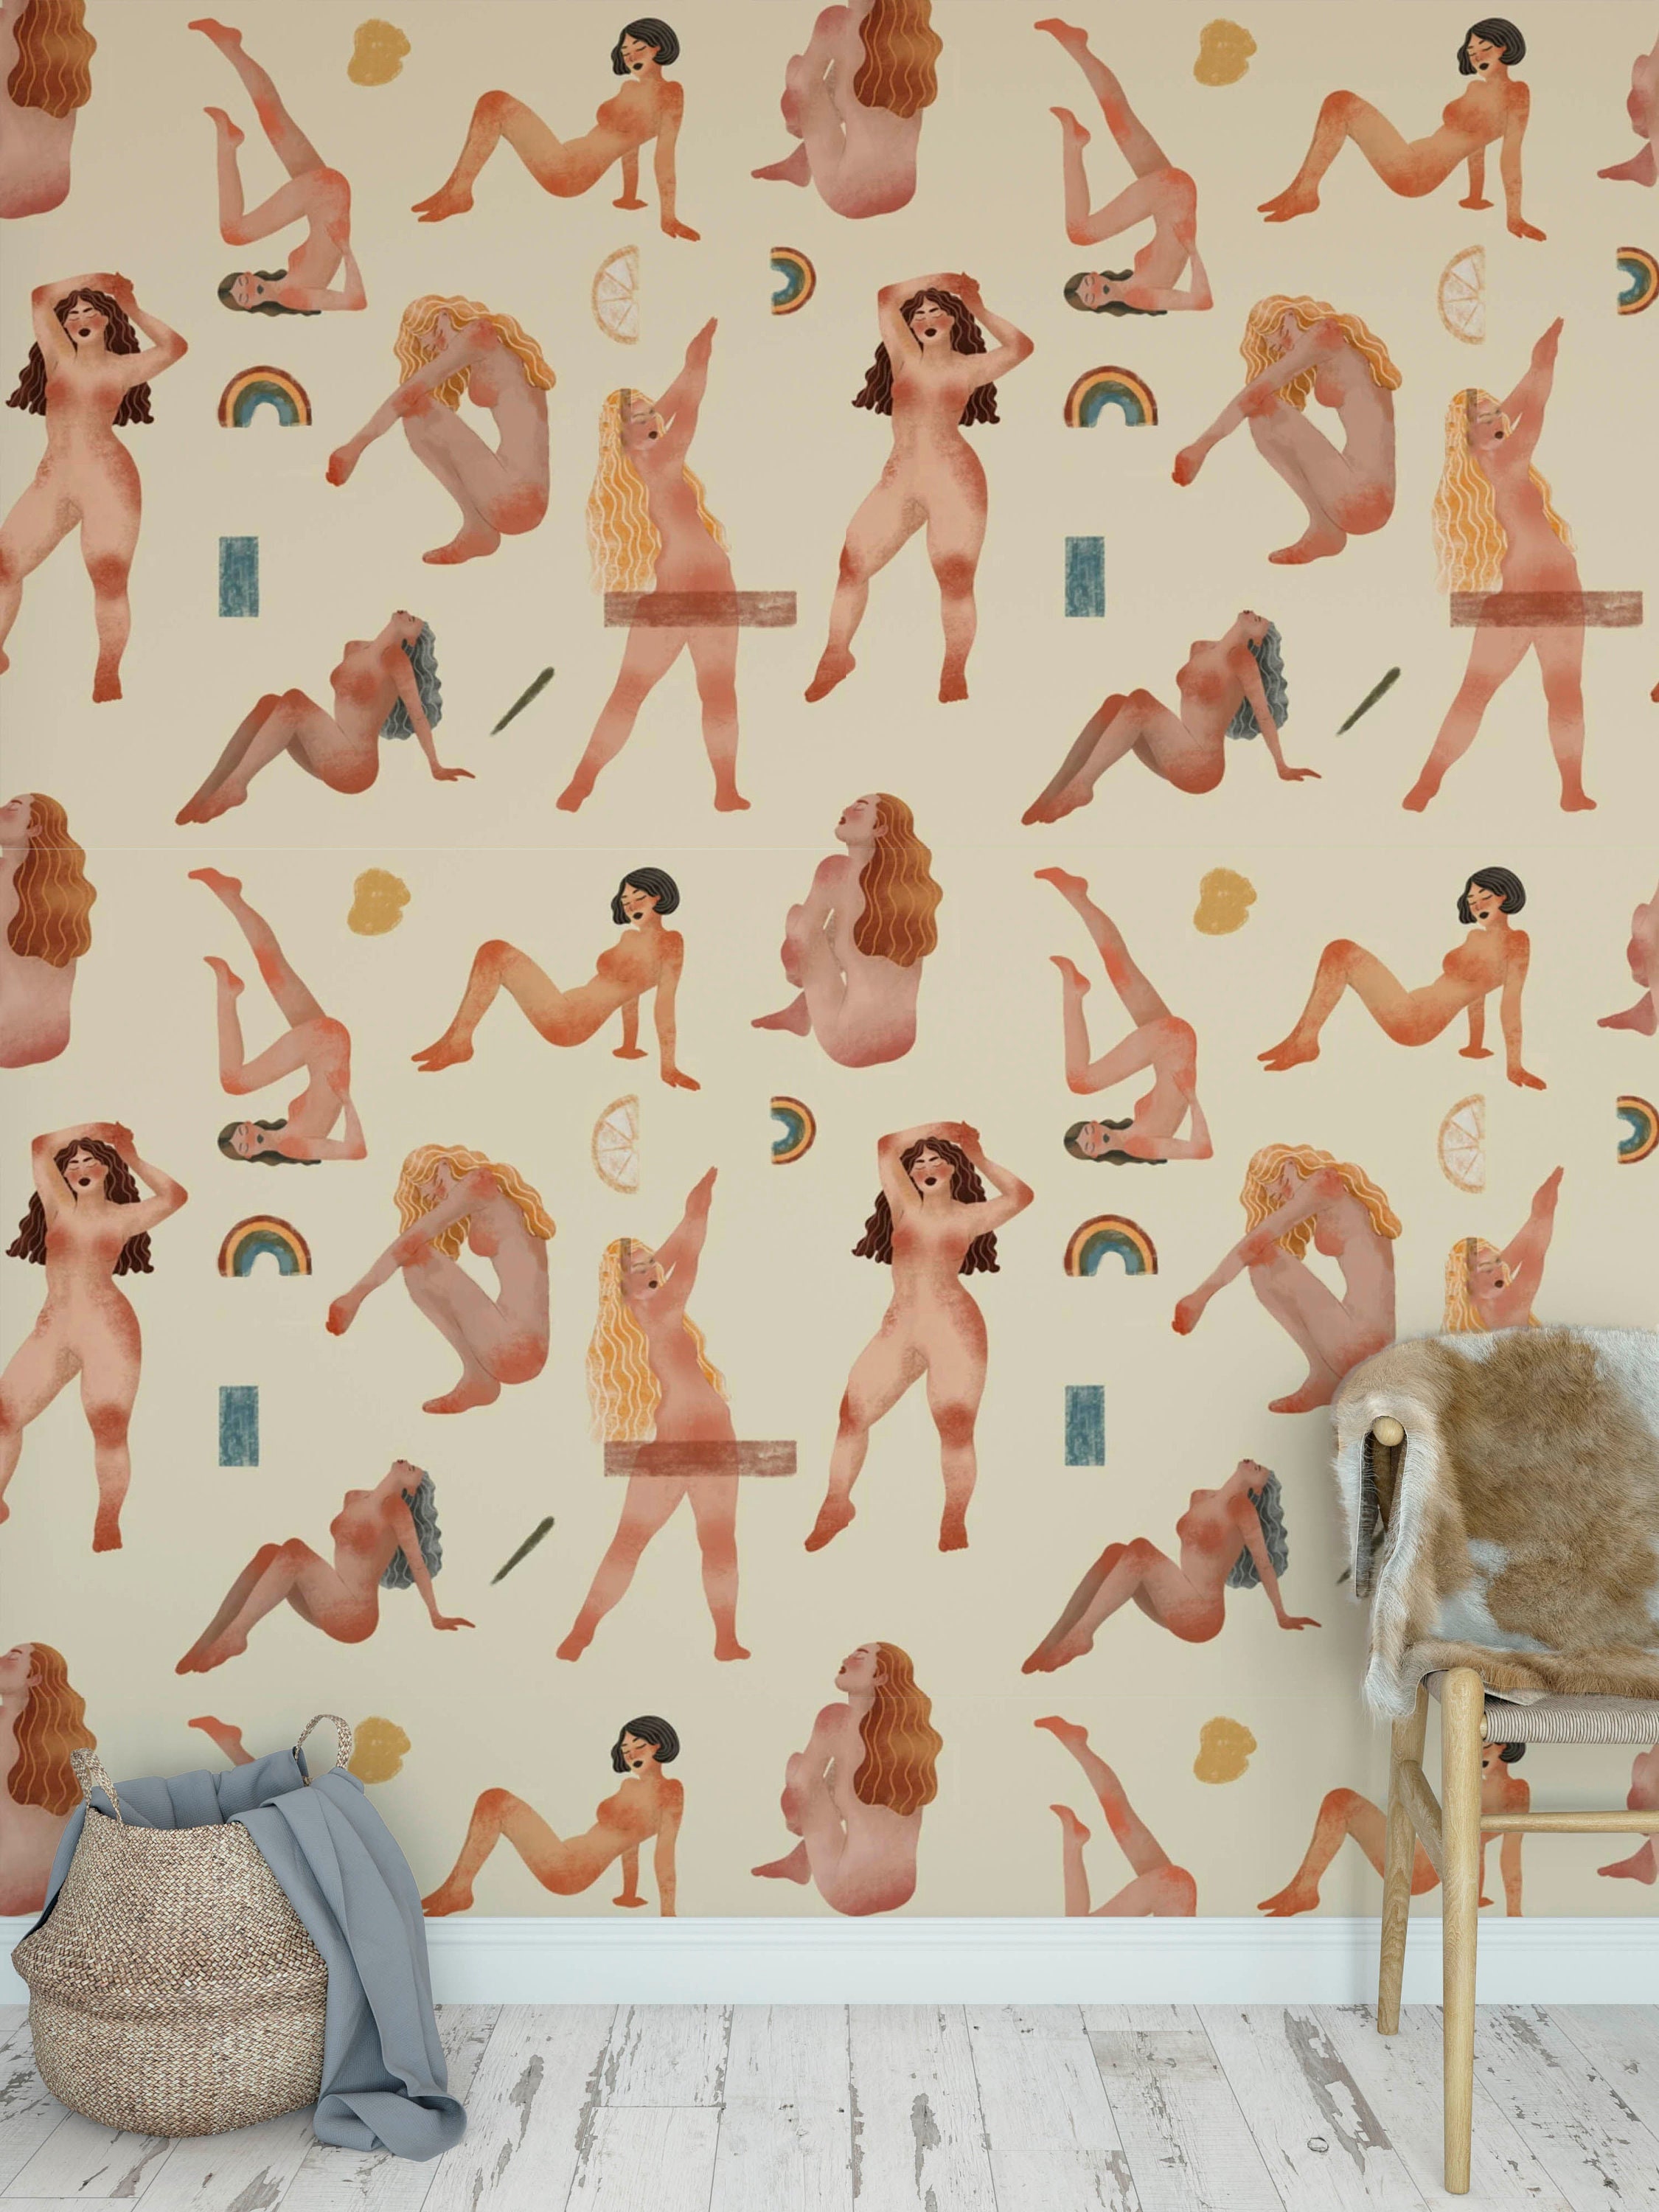 Nude people wallpaper